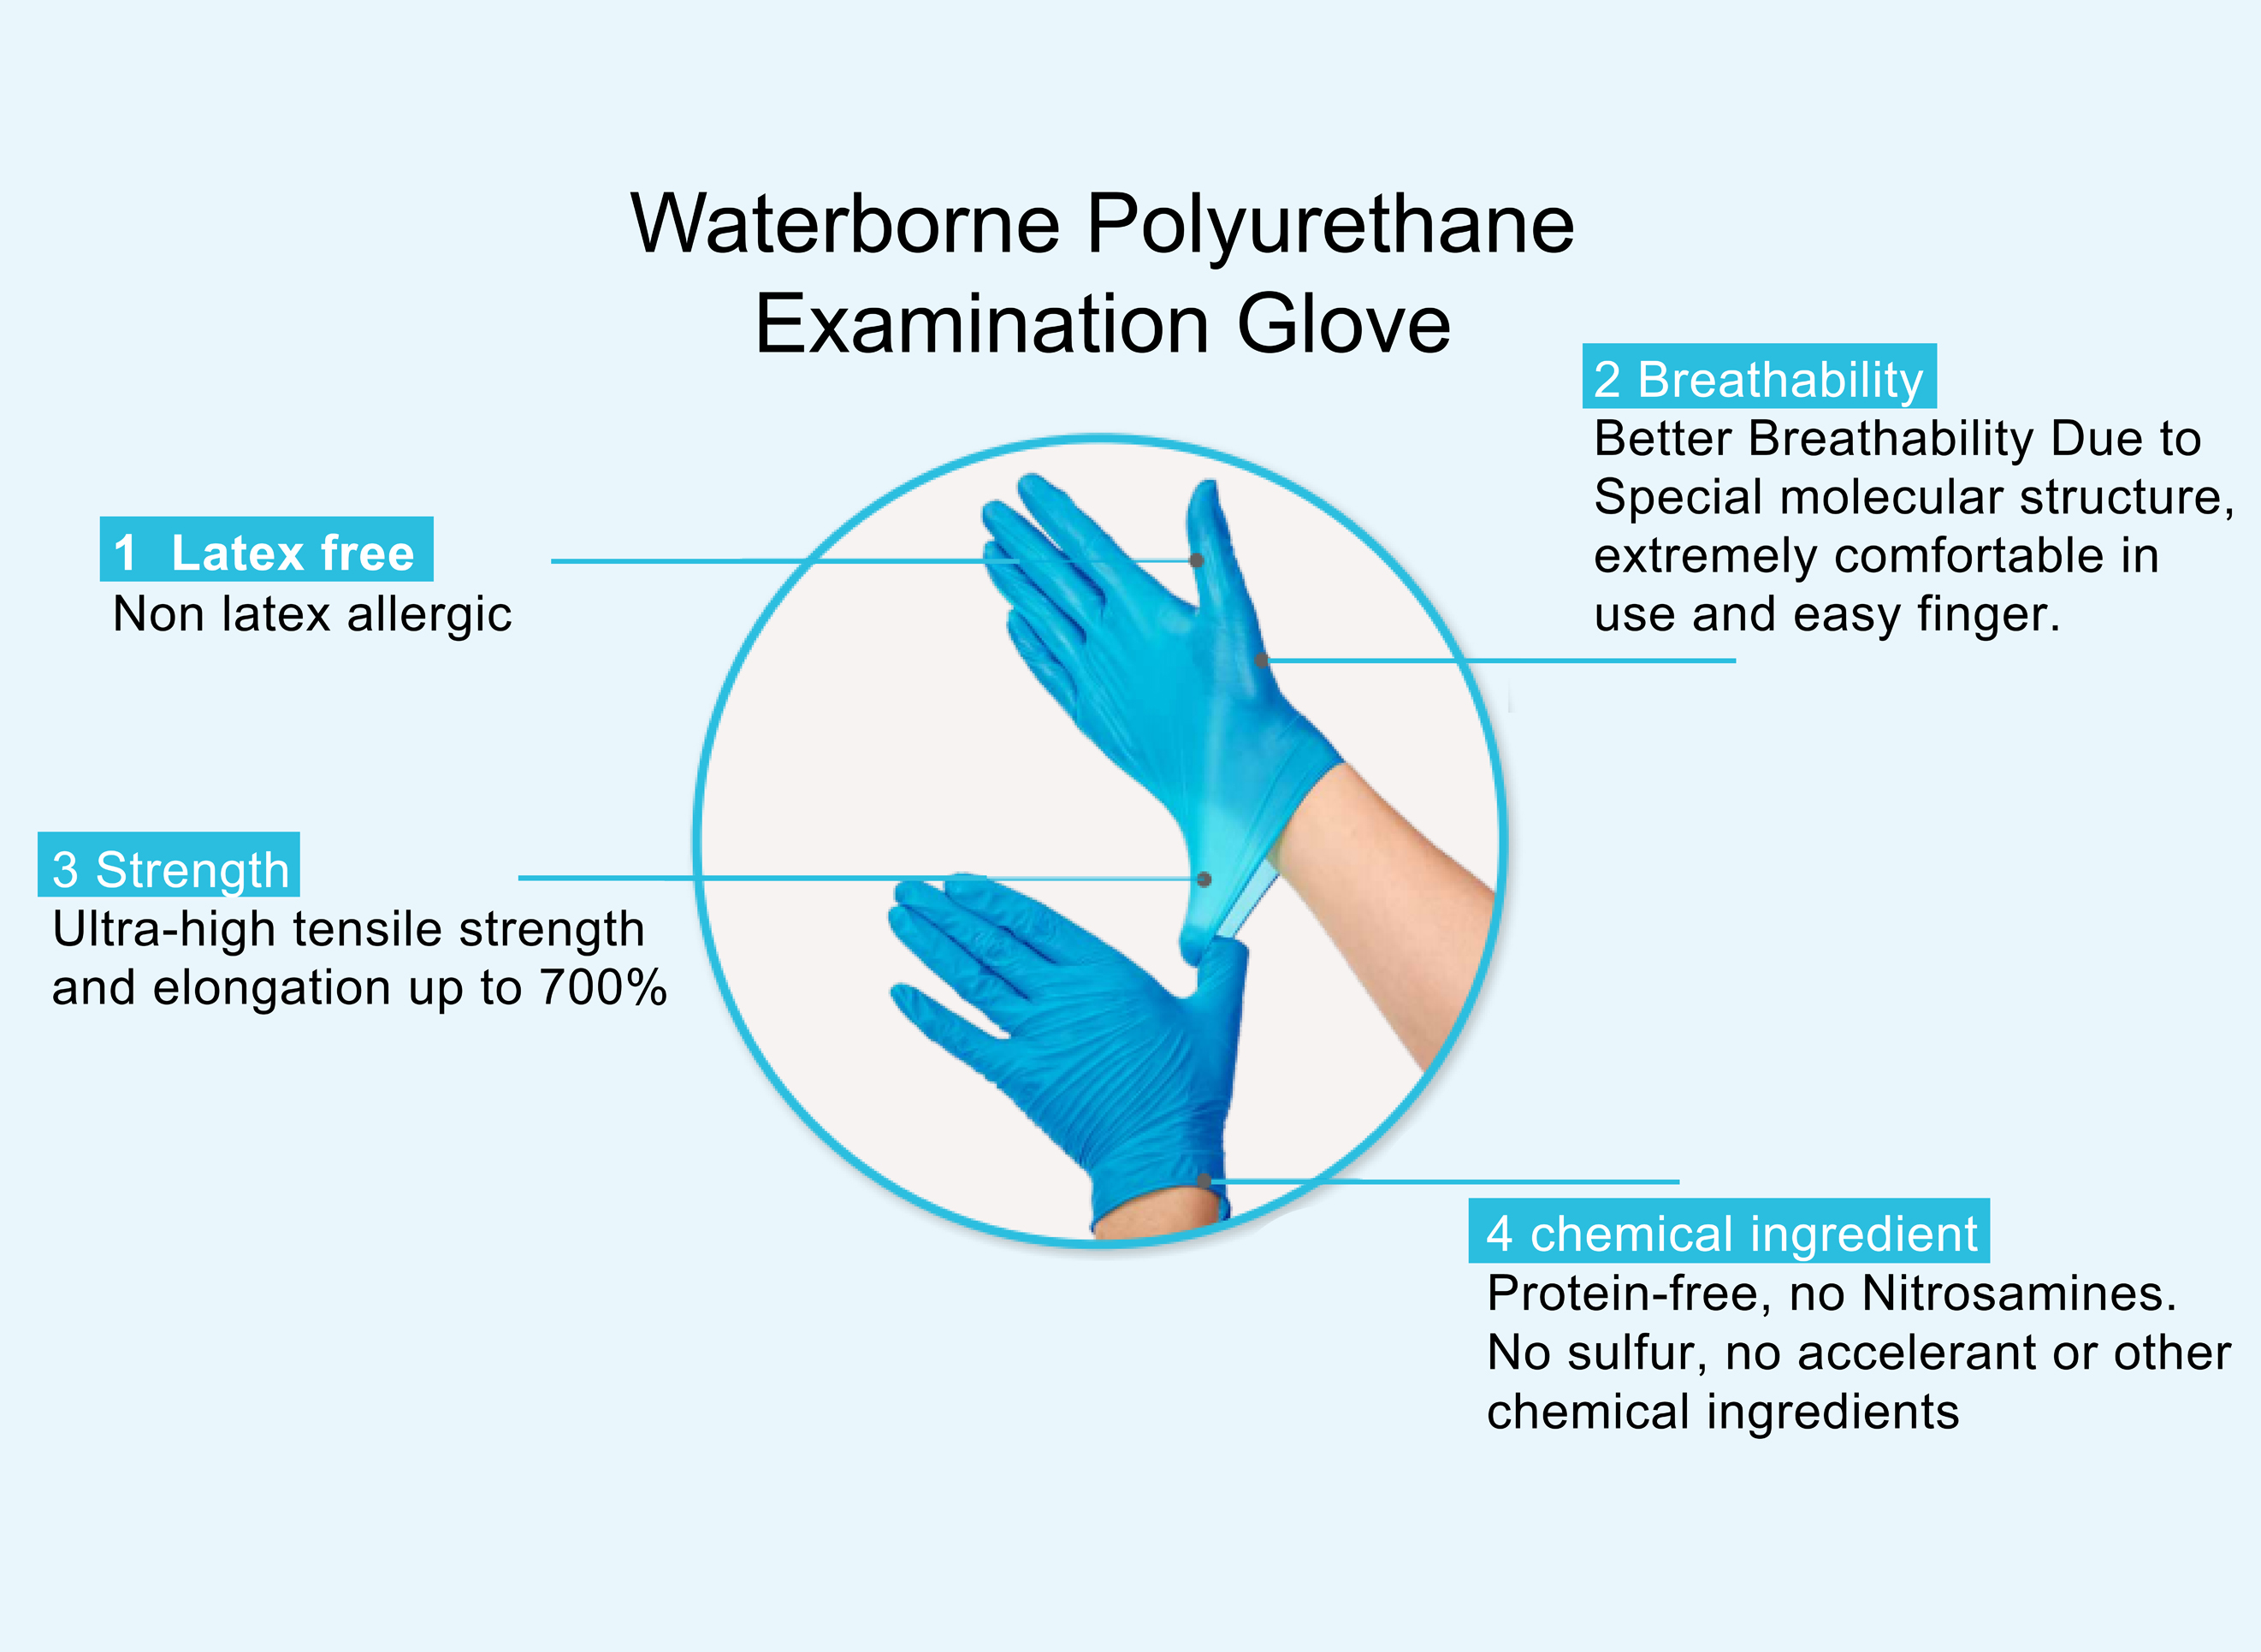 What’s Polyurethane glove’s advantages compare to Nitrile glove?